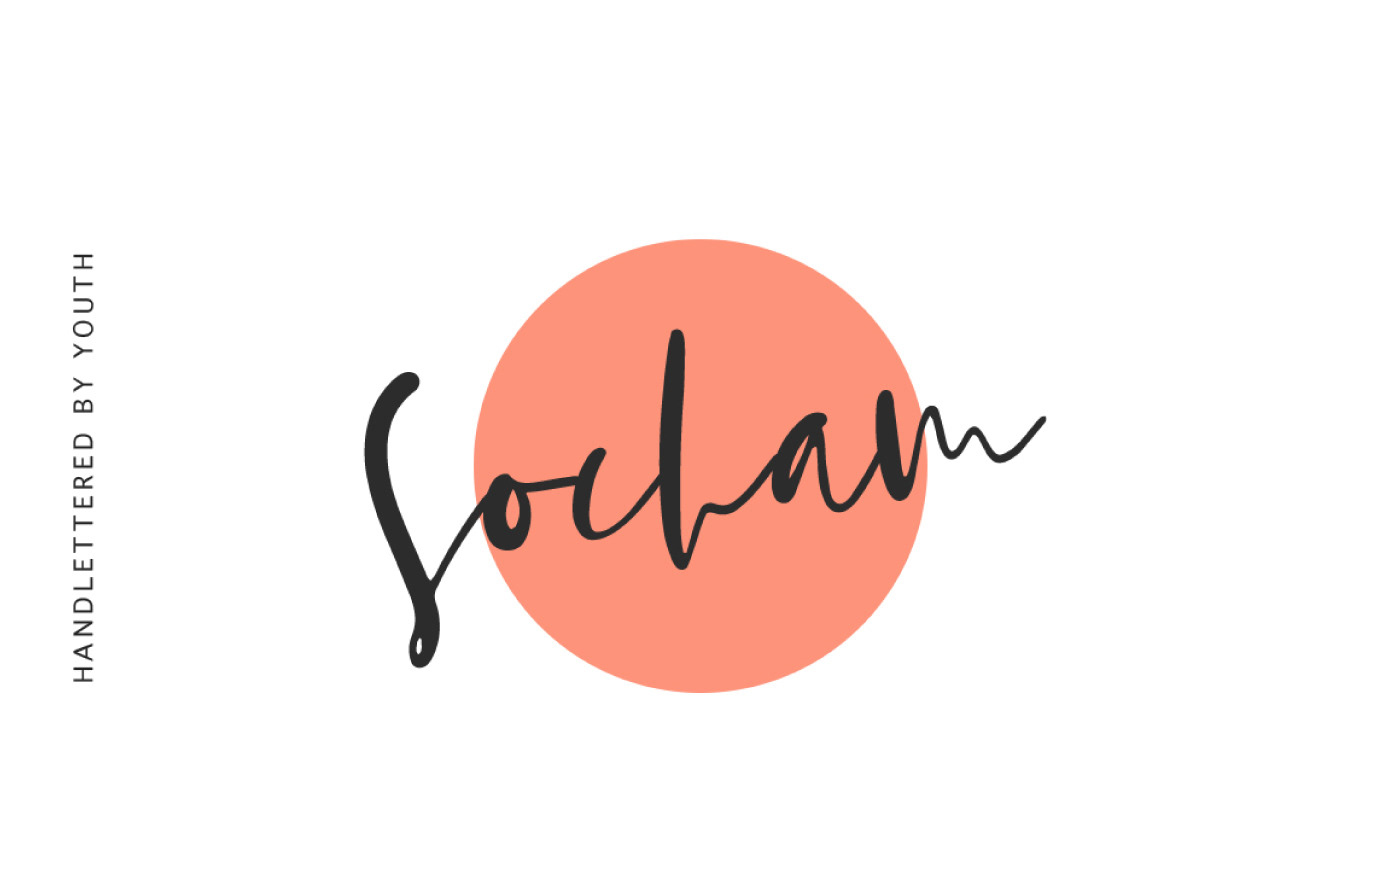 SOCHAM Free Font - script